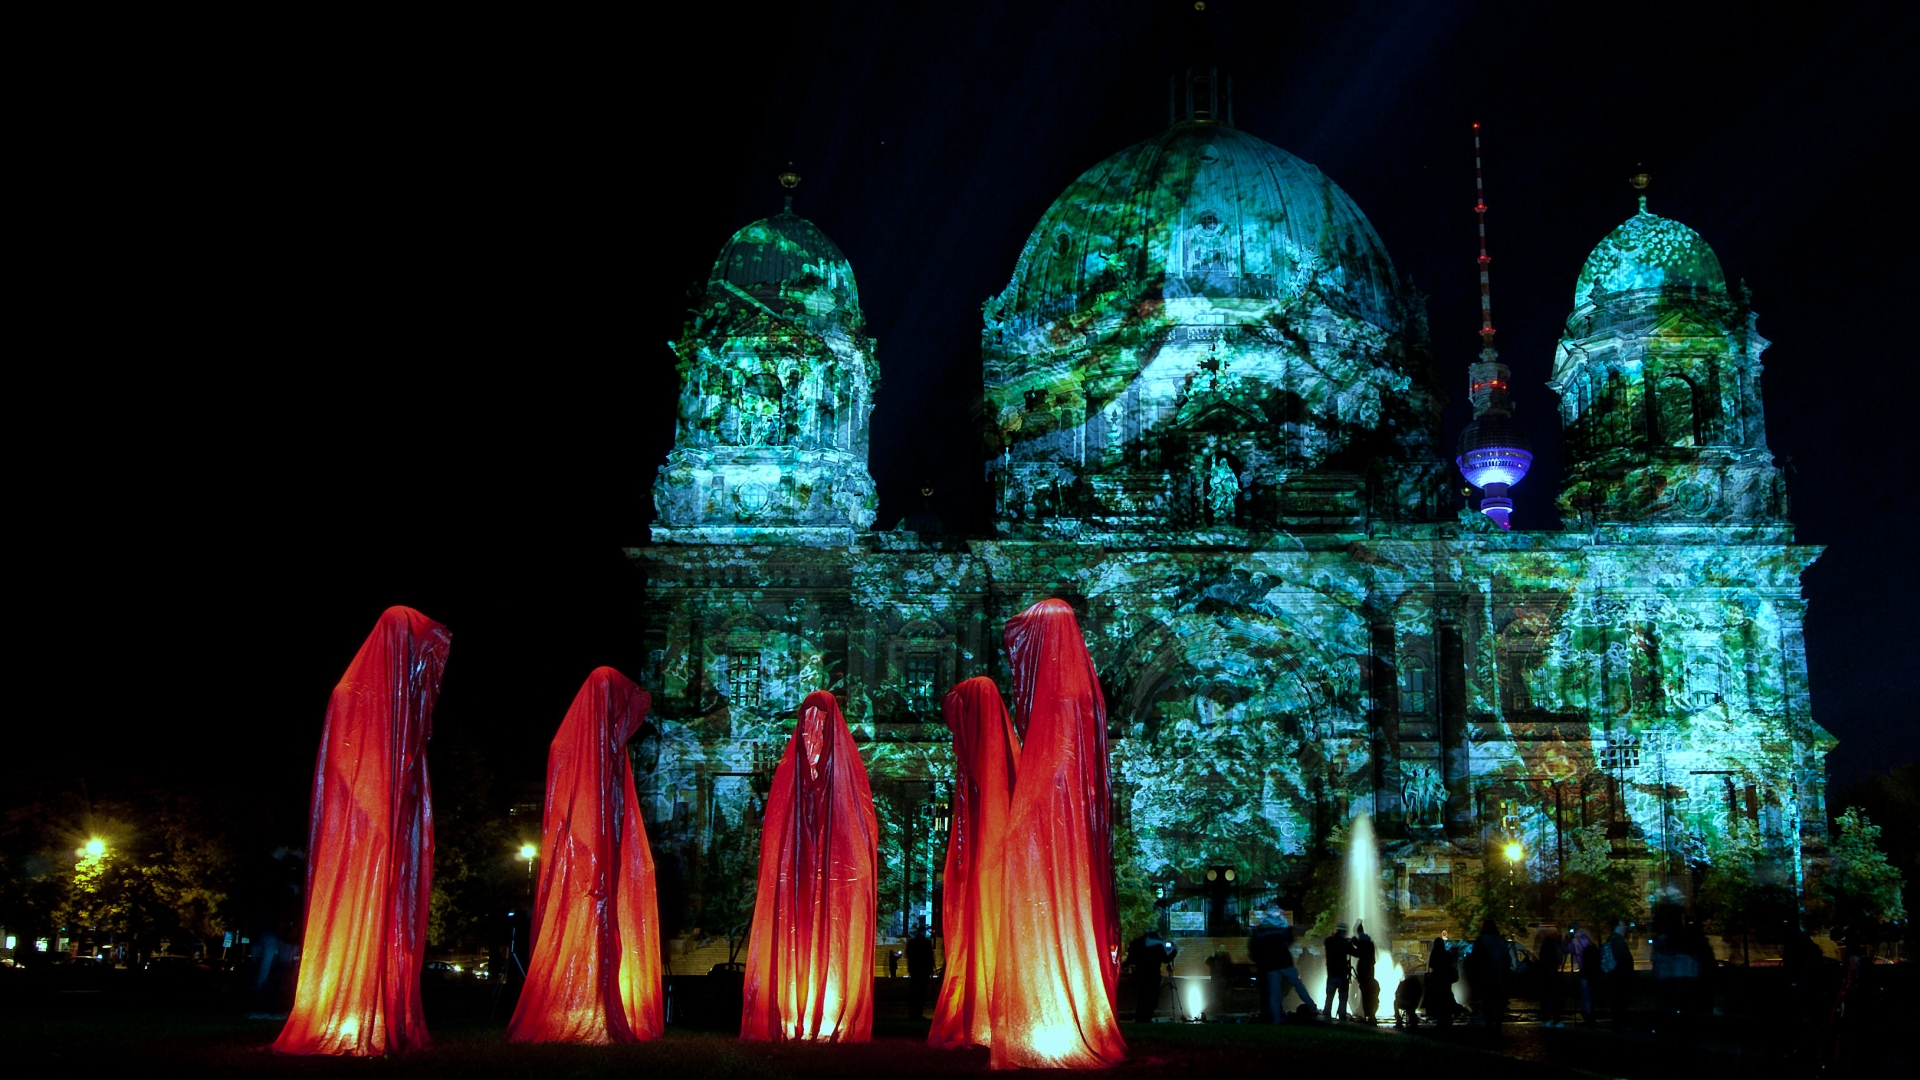 Artistic Festival of Lights - Berlin HD Wallpaper | Background Image